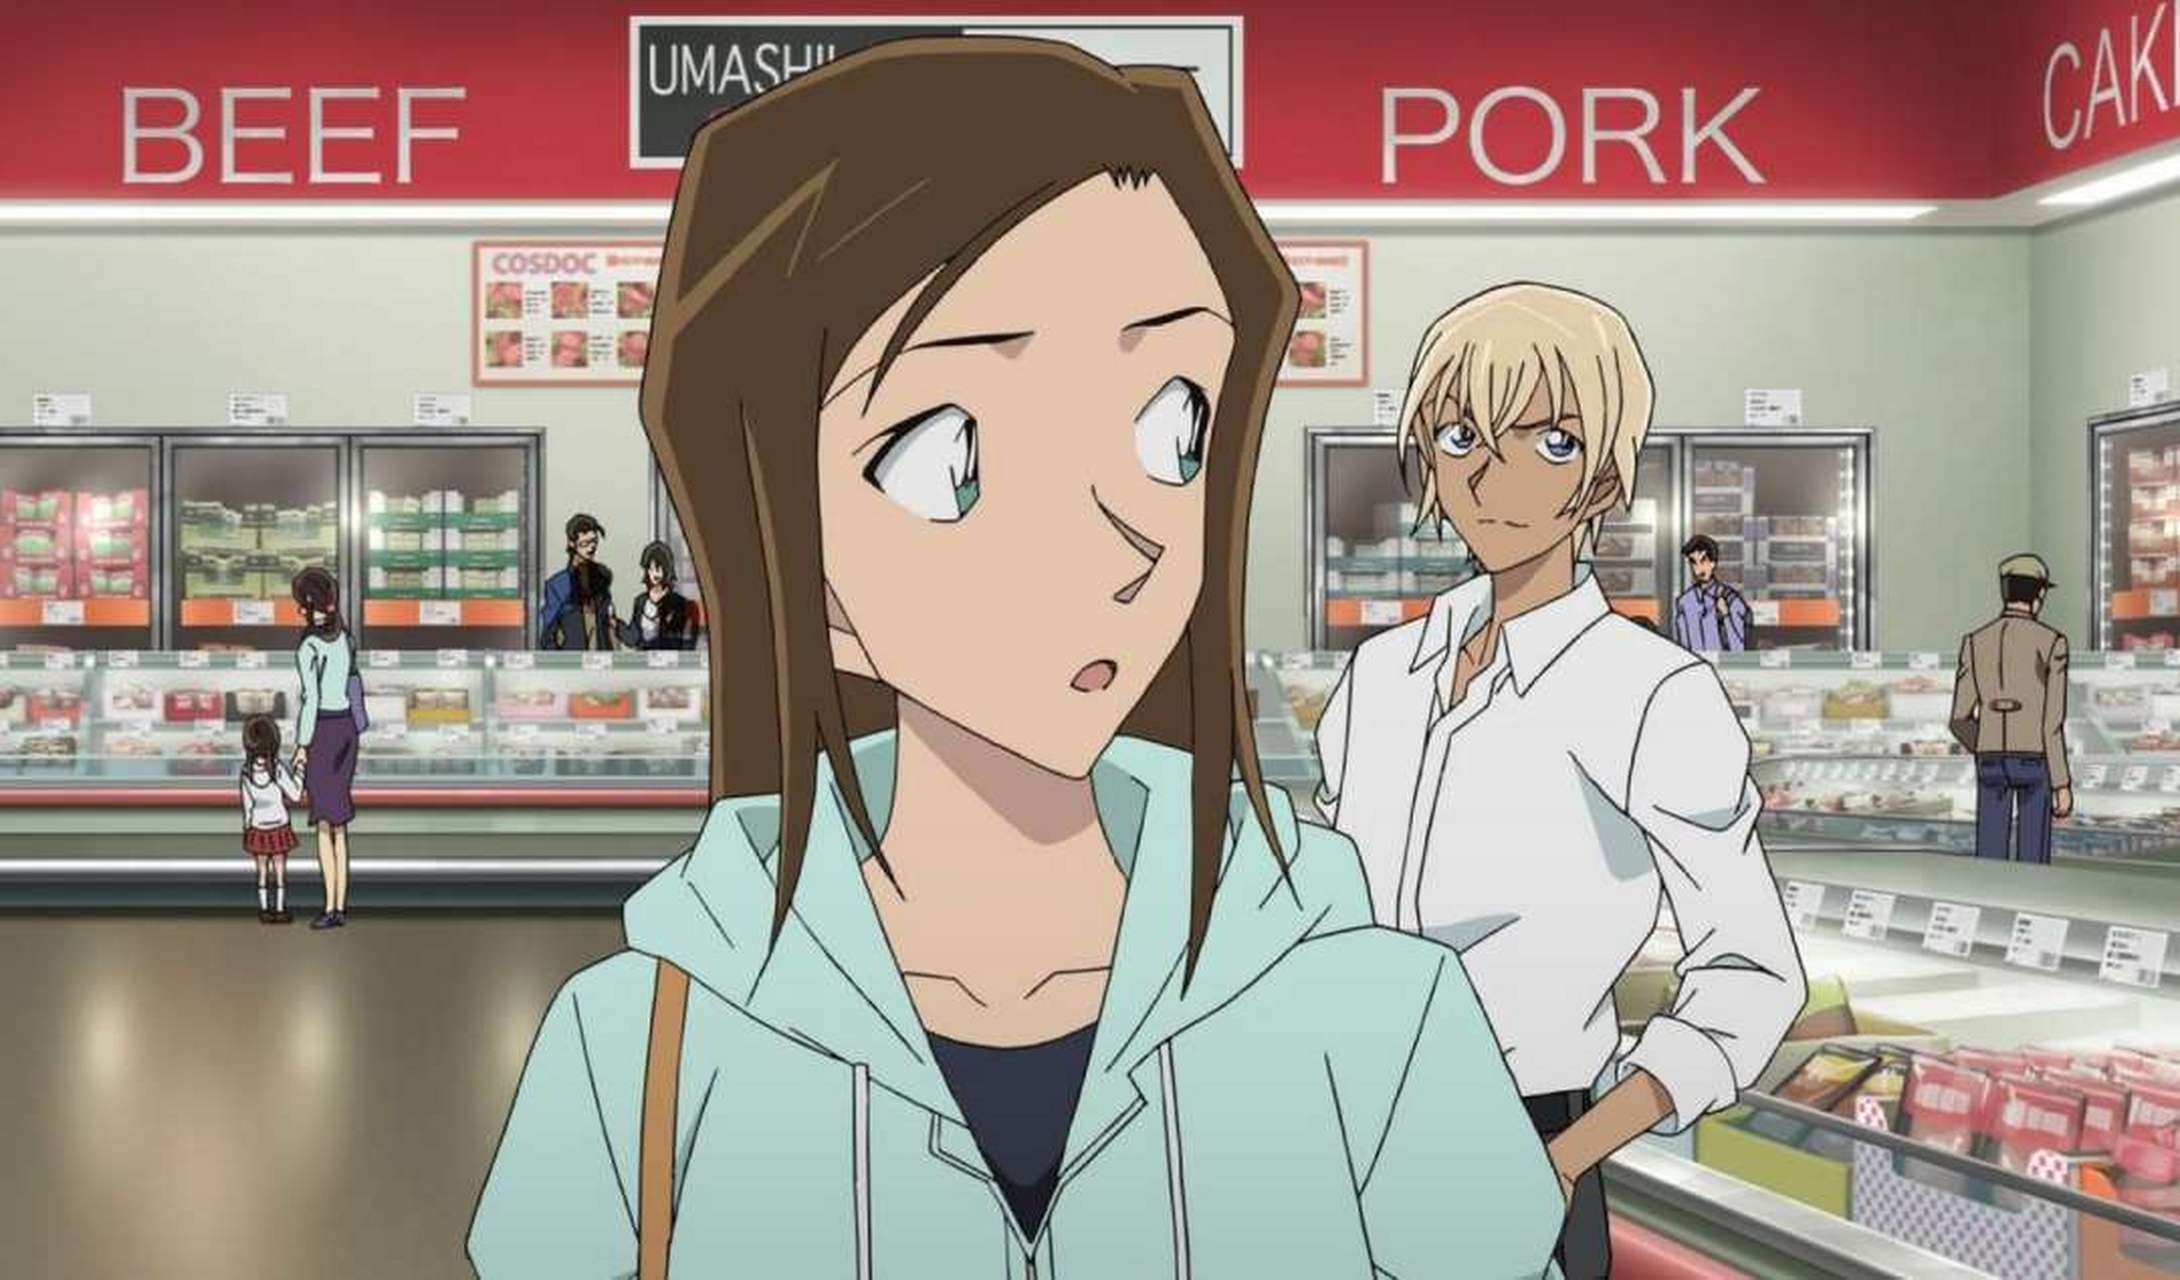 m22《零的执行人》中,安室透在与小梓一起逛超市时,夸赞小梓梓小姐